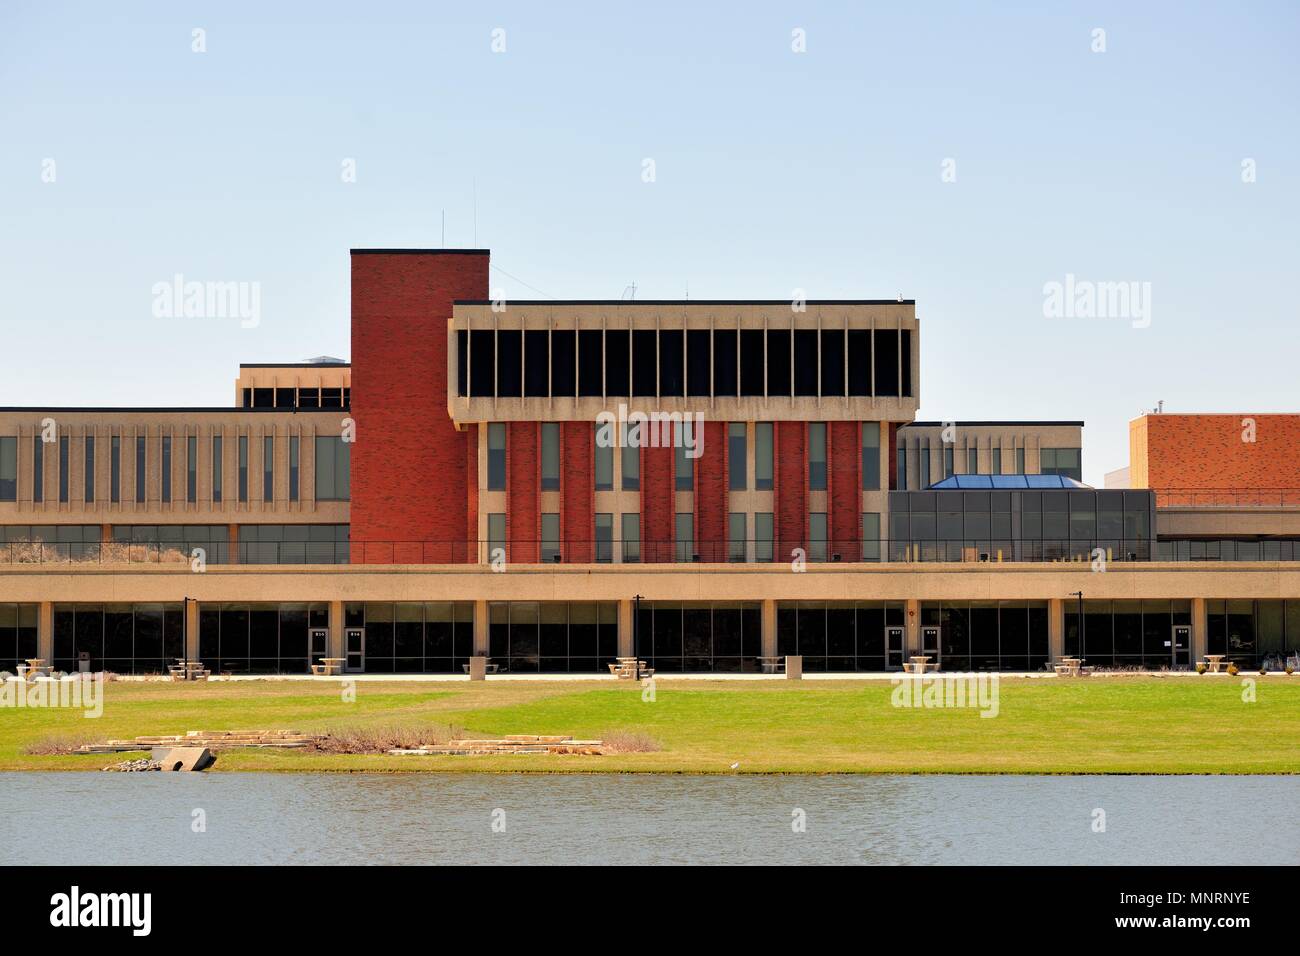 Elgin, Illinois, USA. Das Student Resource Centre auf dem Campus der Elgin Community College. Stockfoto